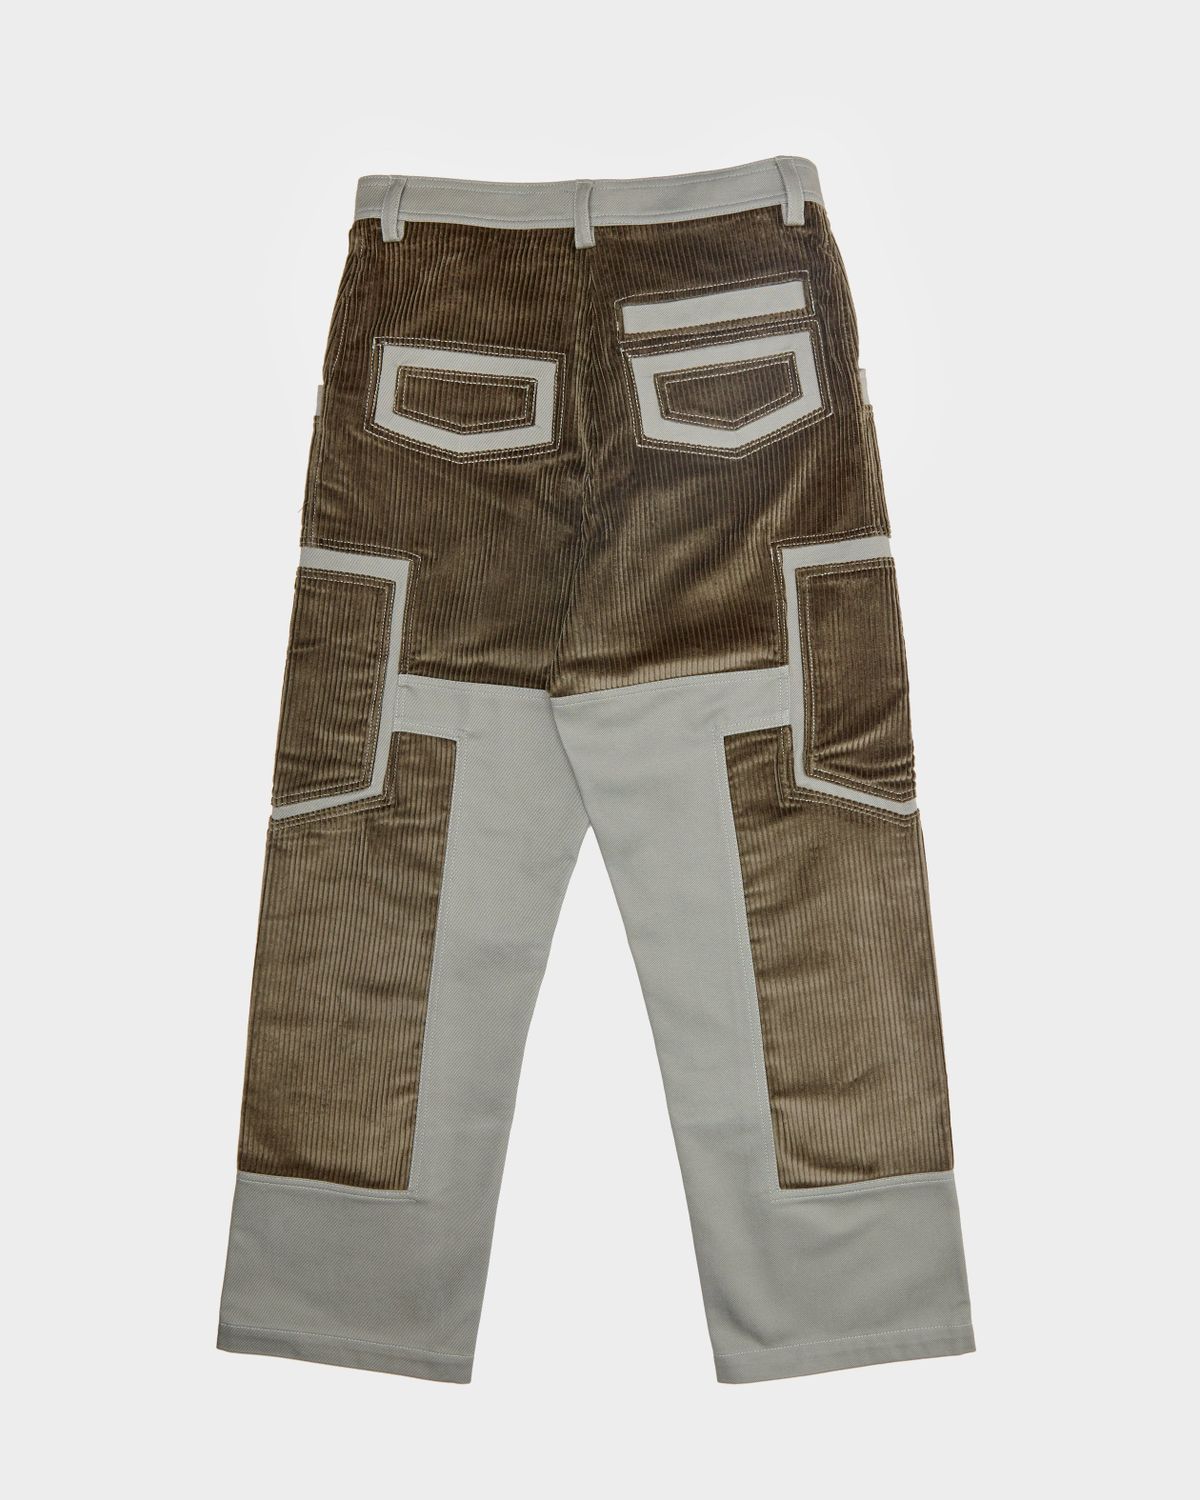 JACQUEMUS – Le Pantalon Bellu Green - Trousers - Green - Image 2